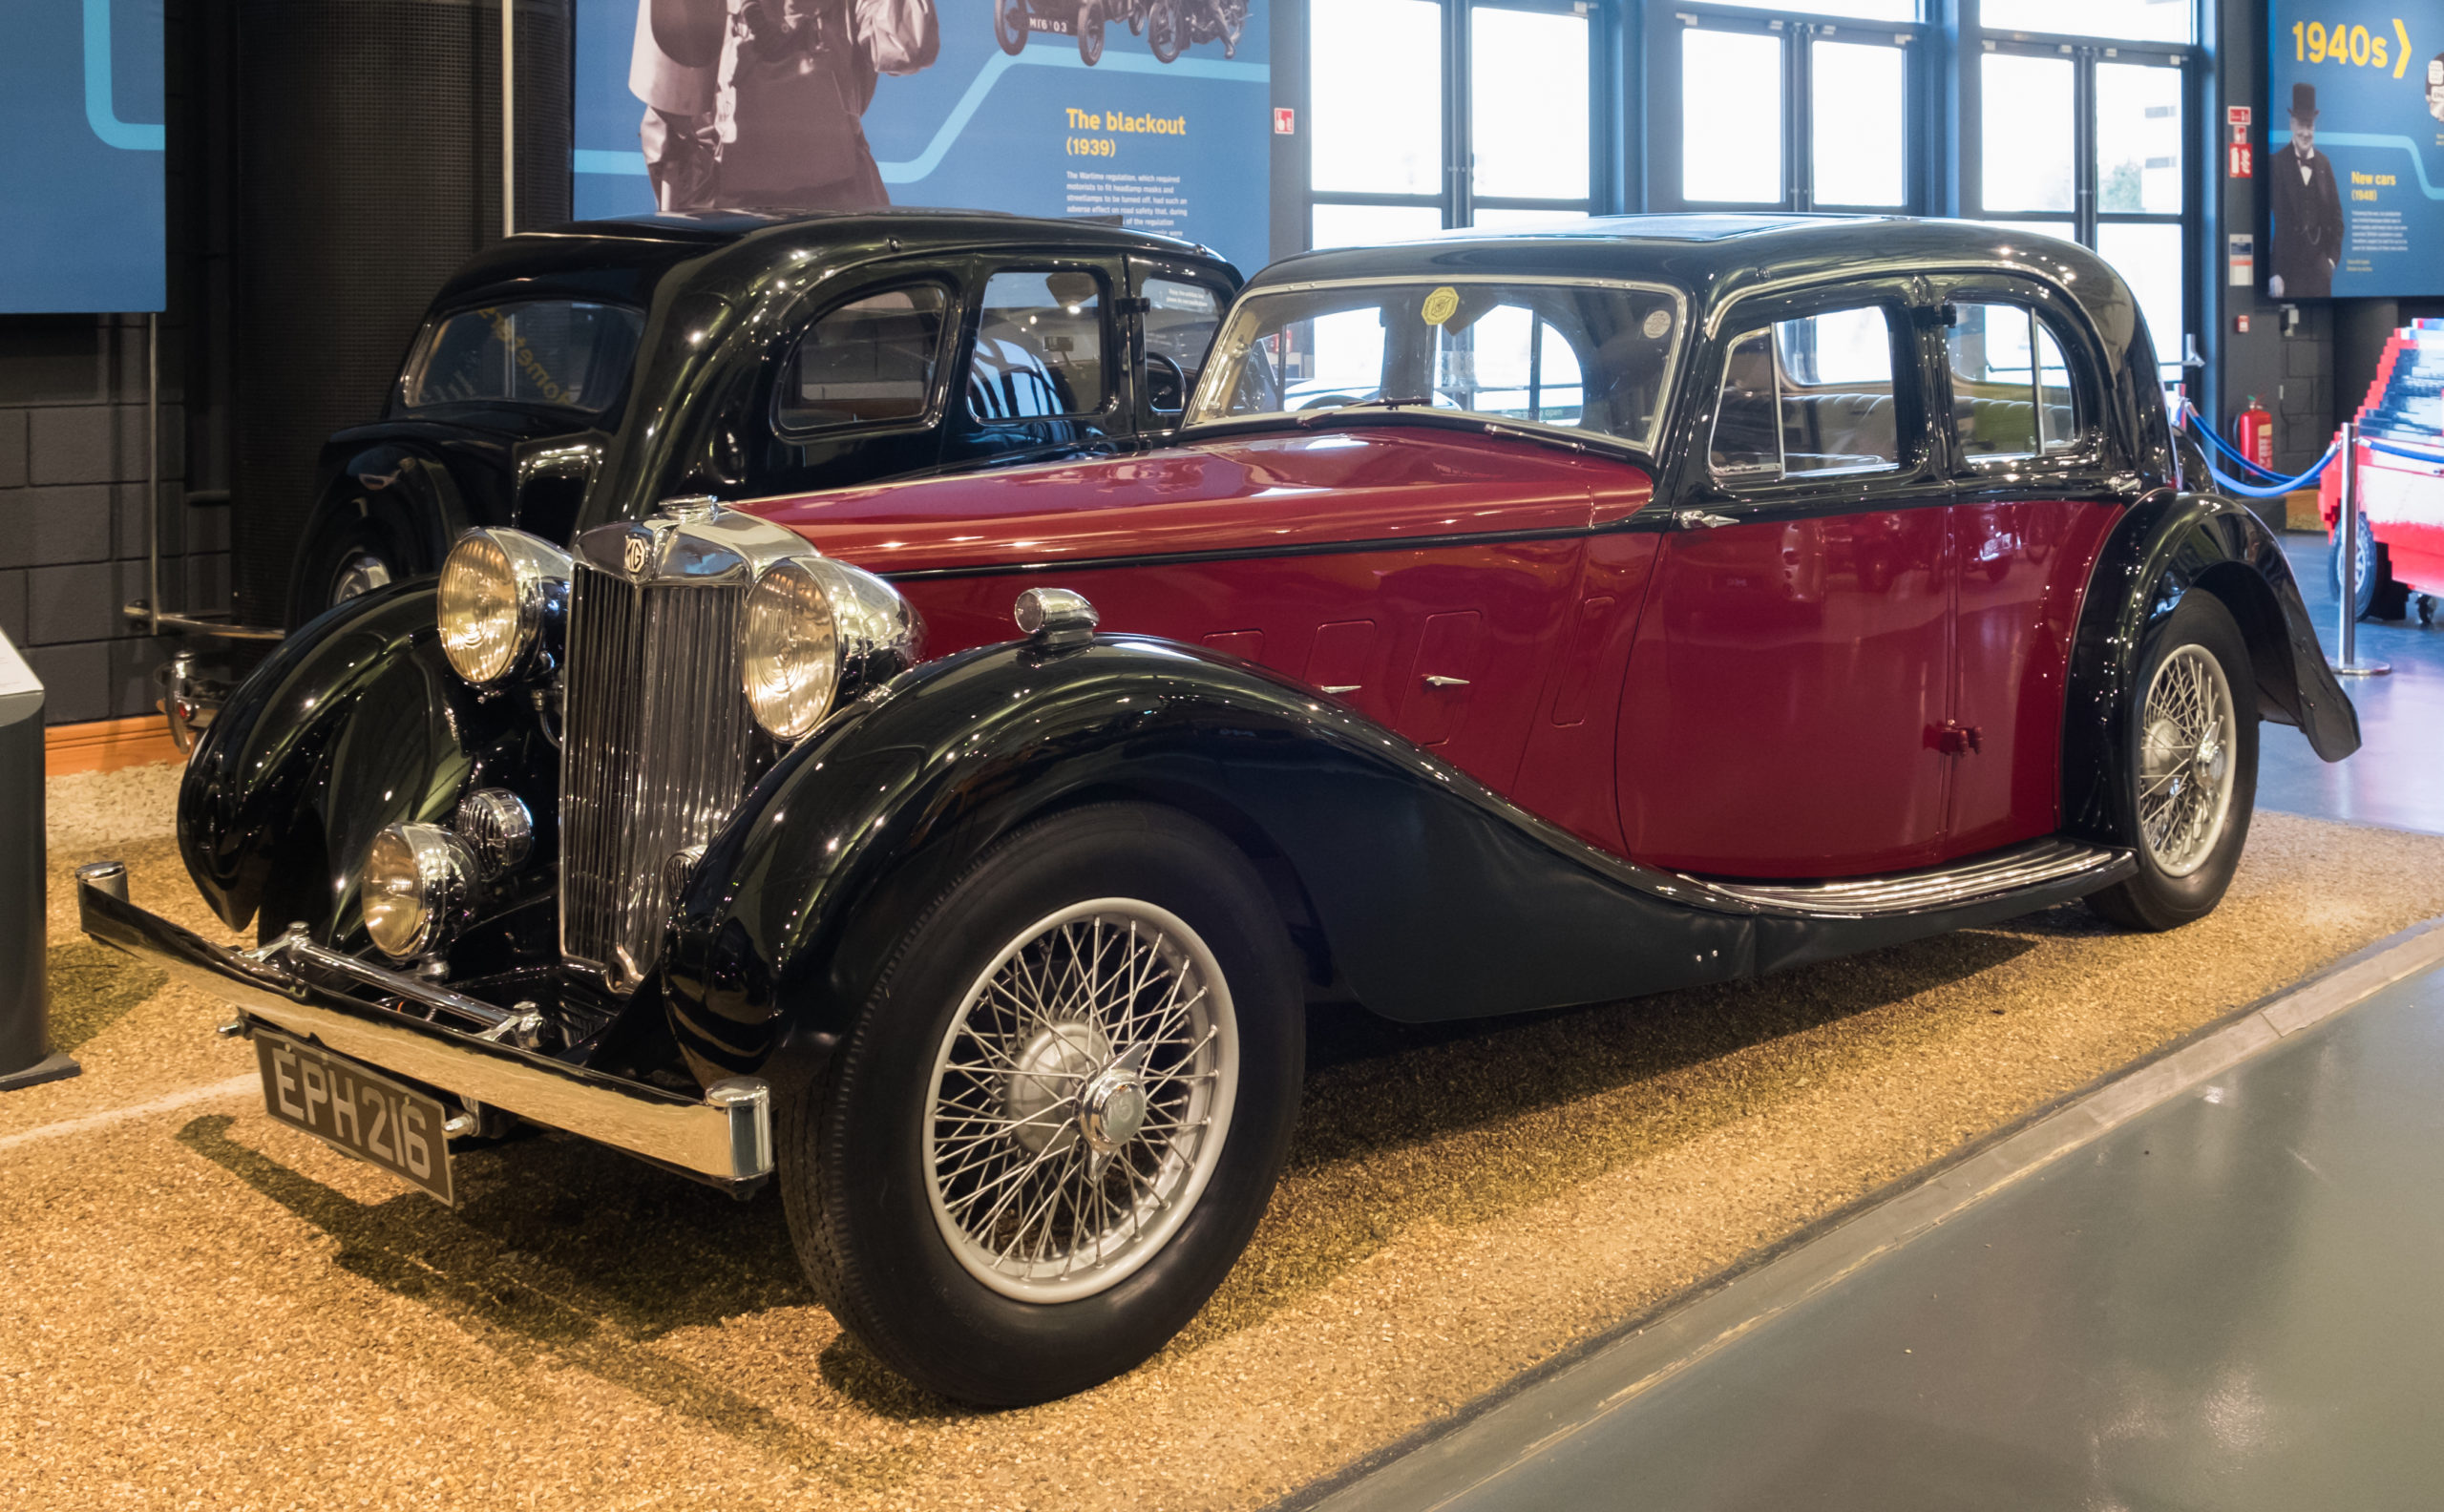 1930s, classic cars